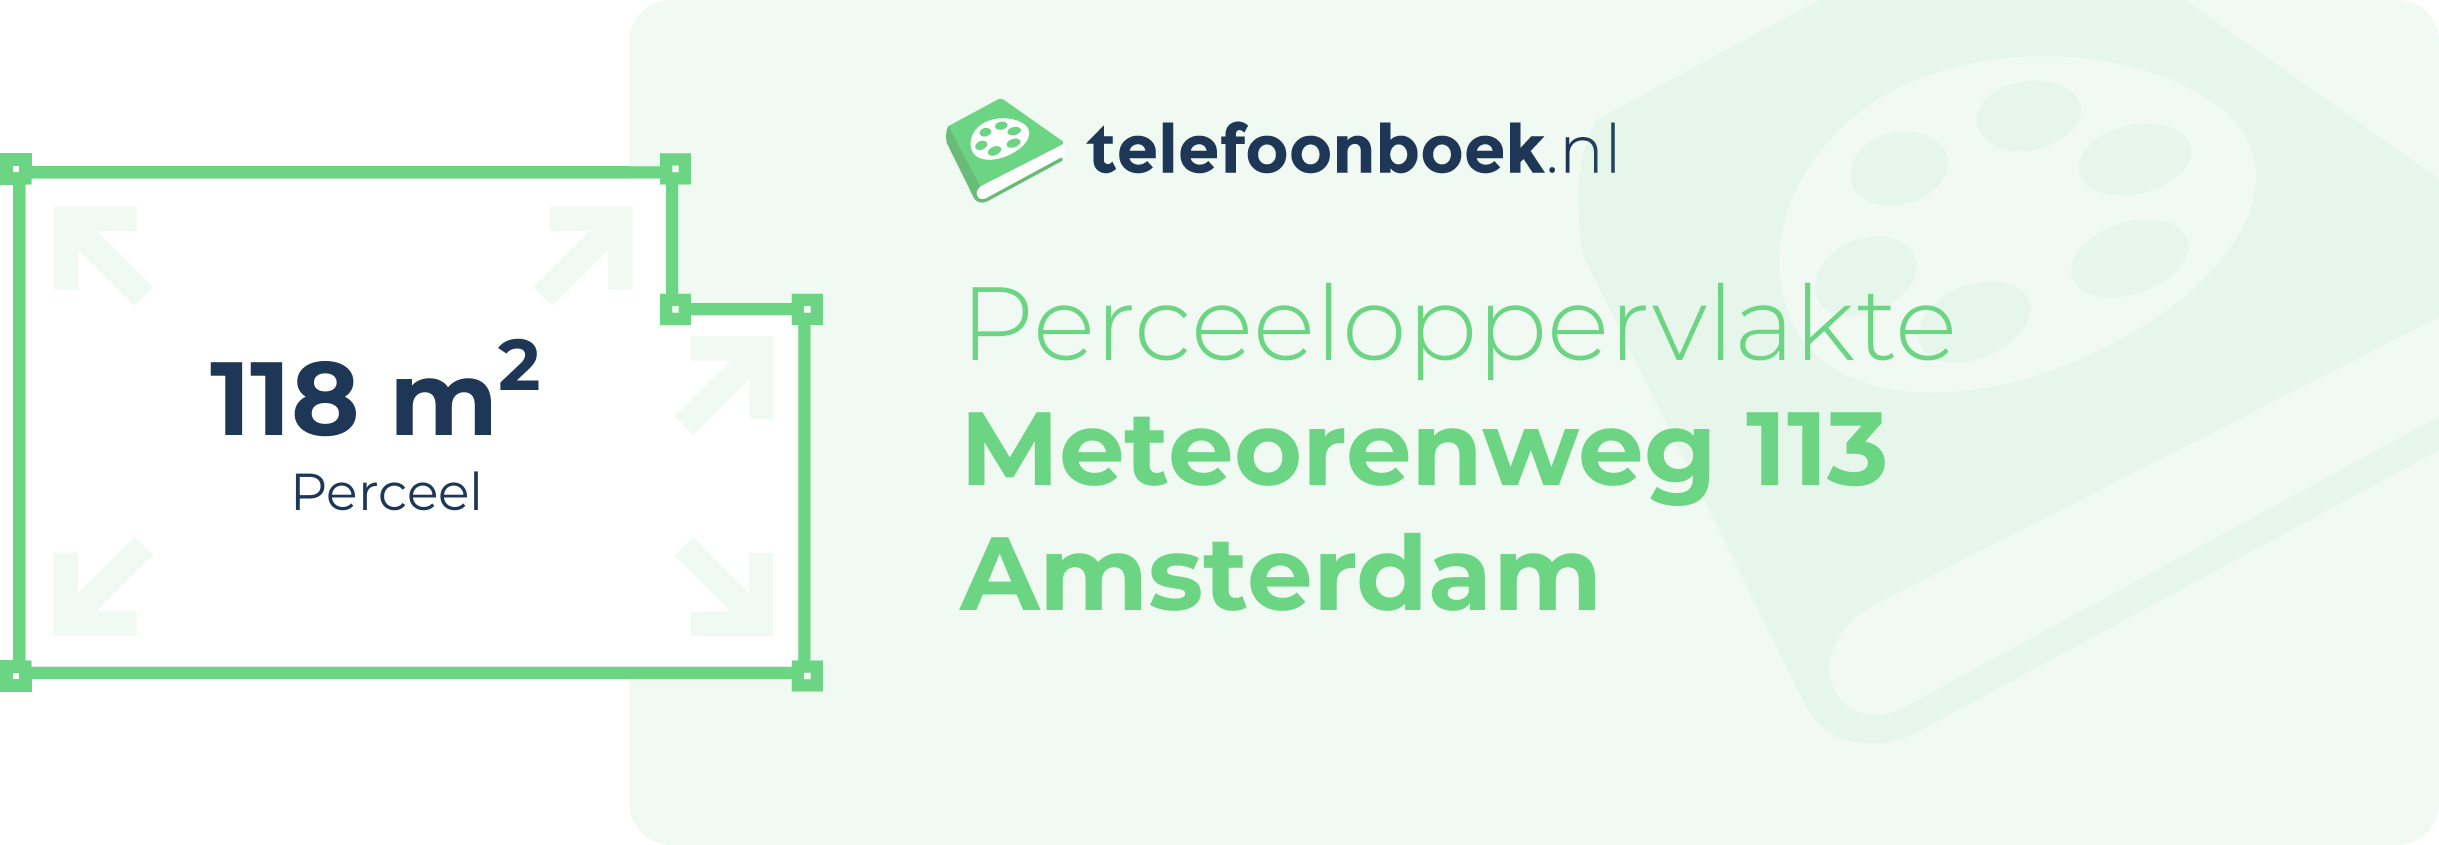 Perceeloppervlakte Meteorenweg 113 Amsterdam